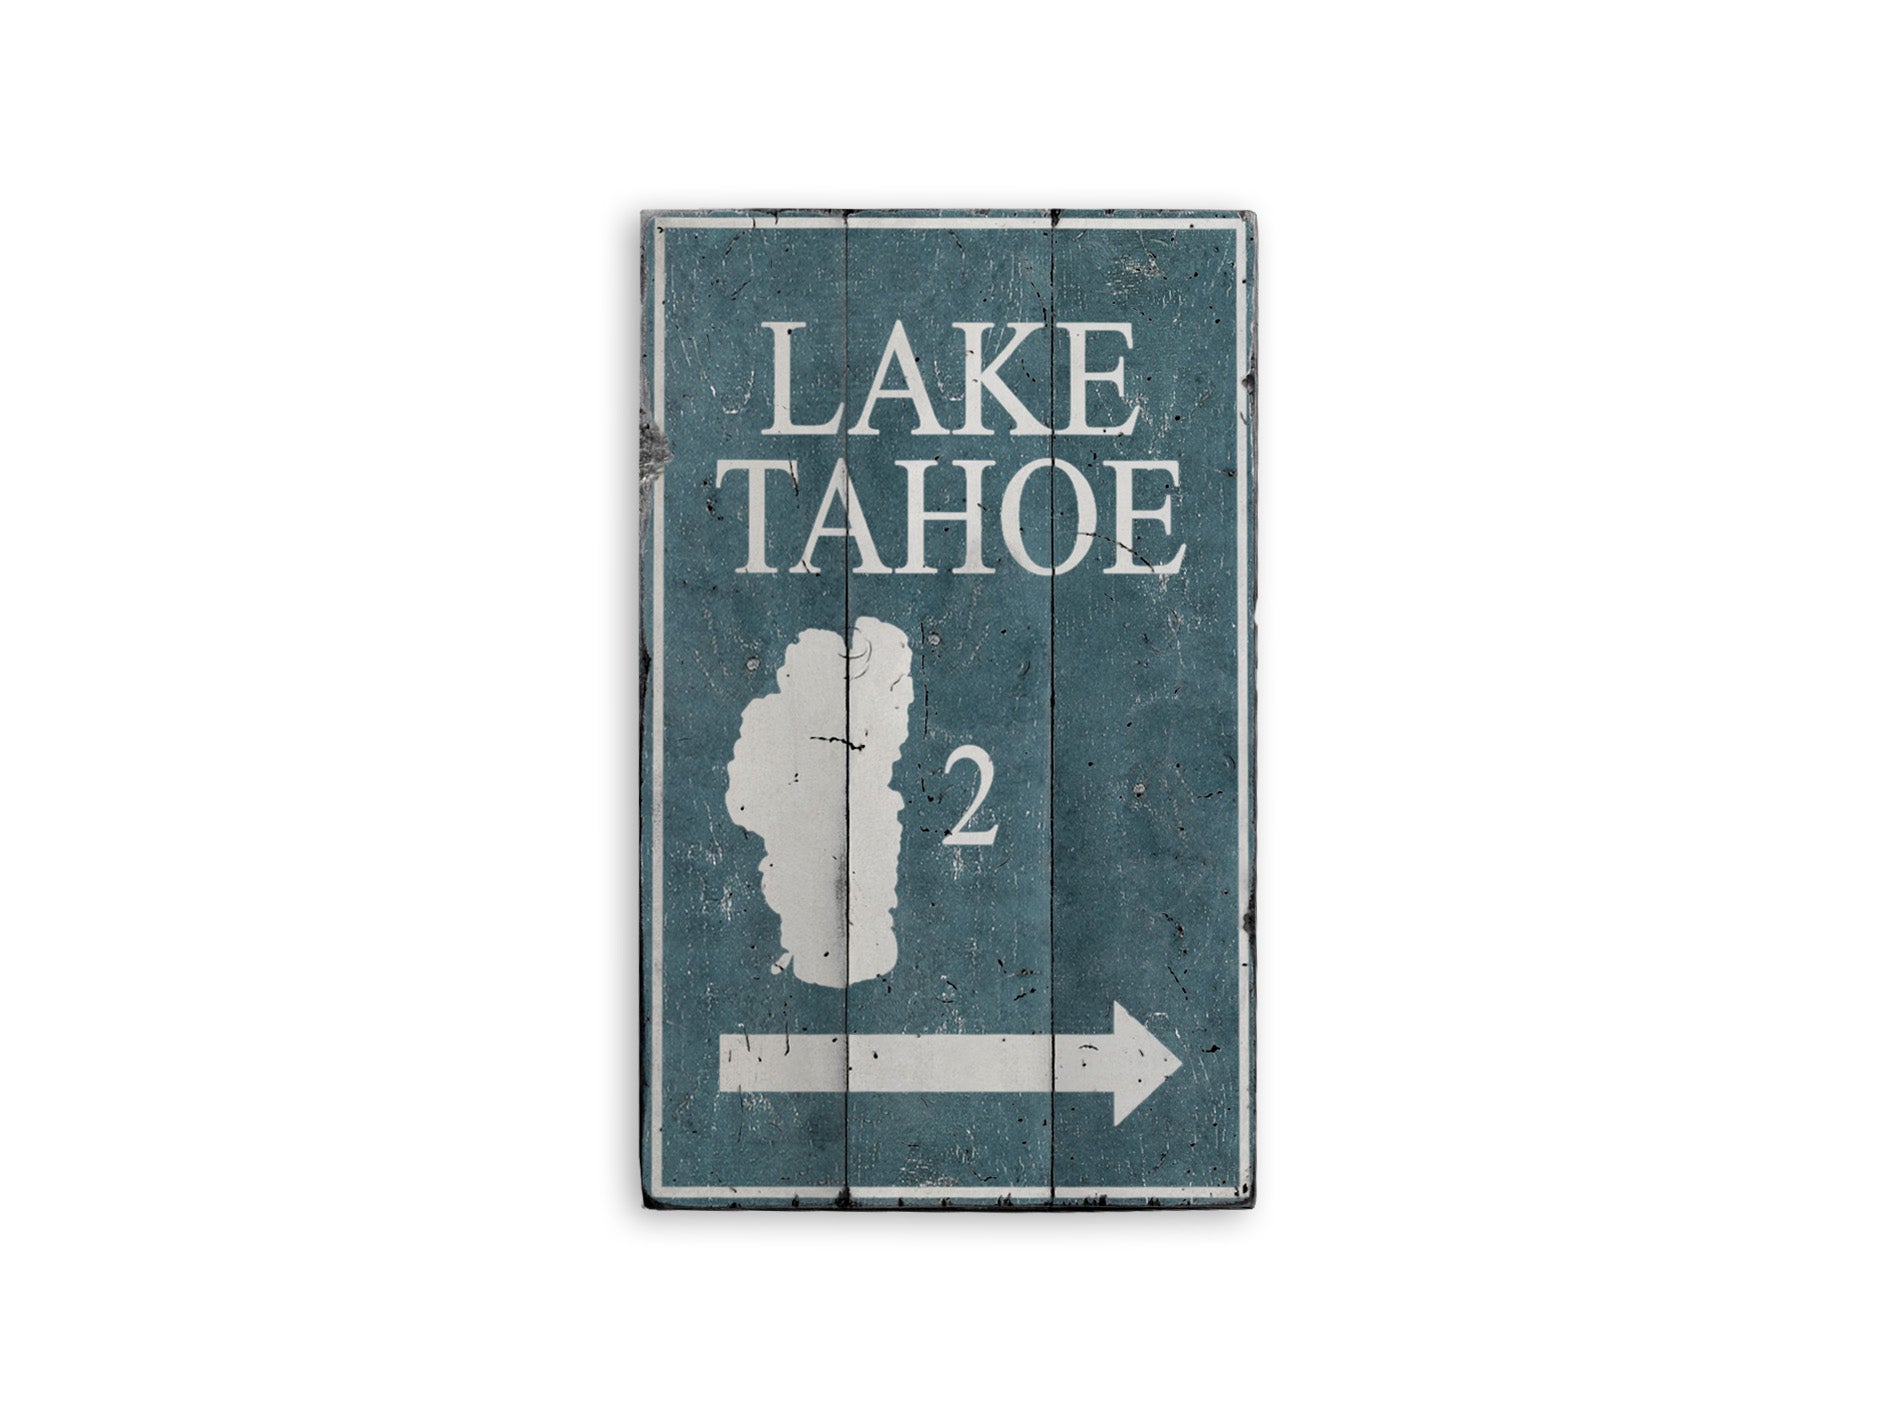 Lake Tahoe Mileage Rustic Wood Sign